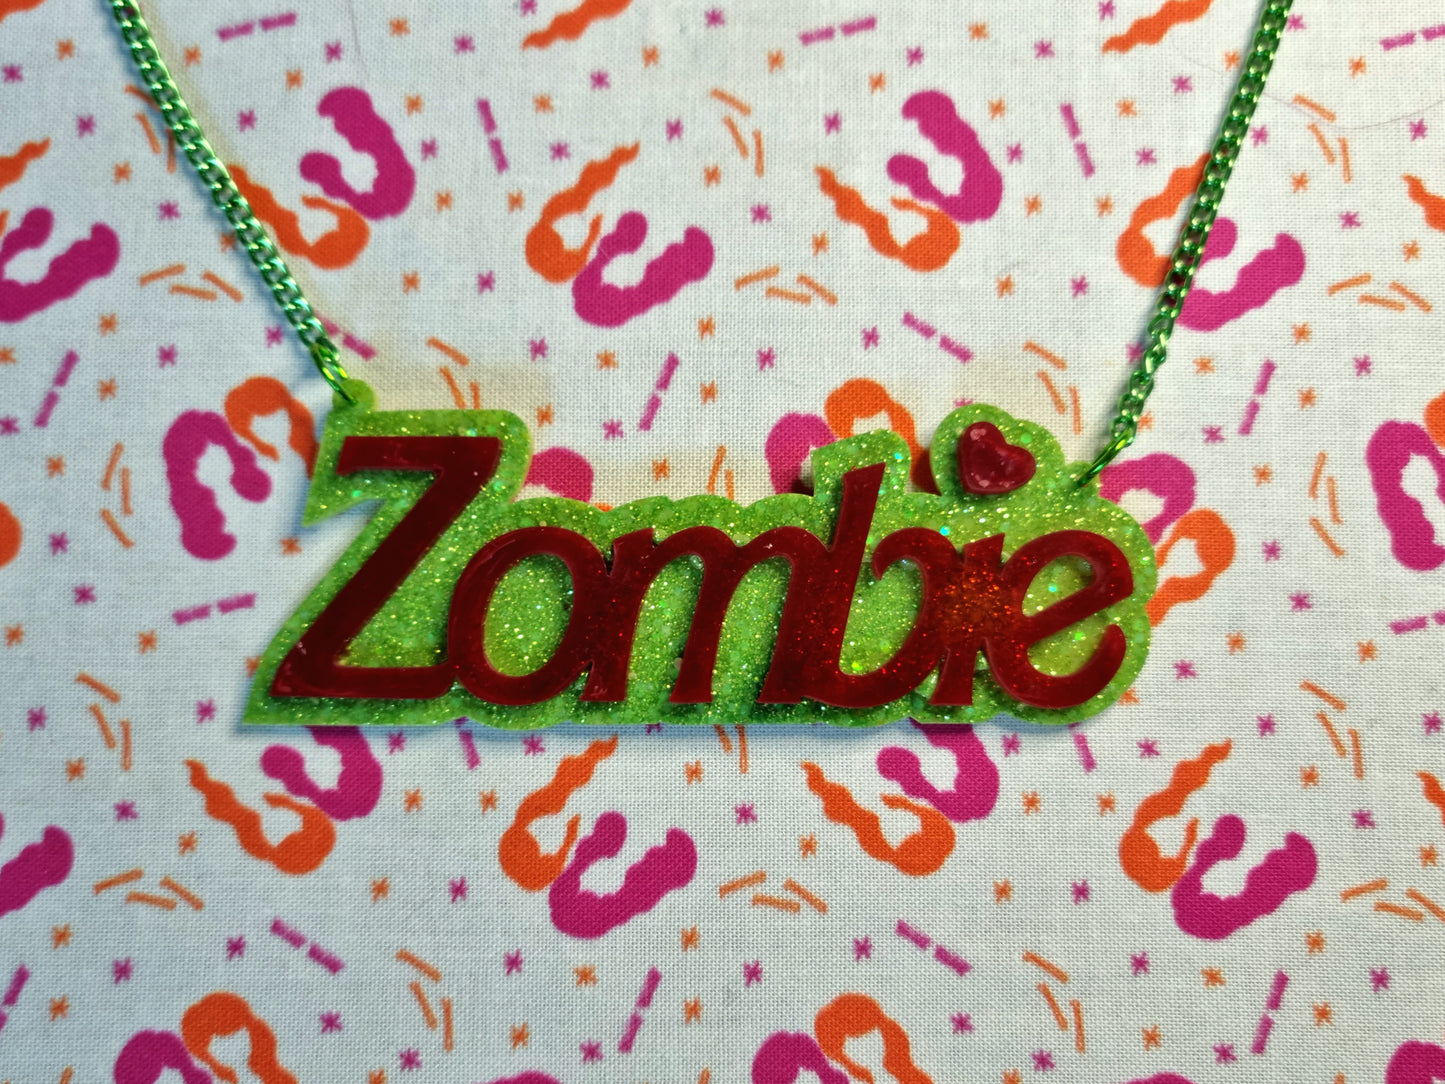 Zombie Necklace